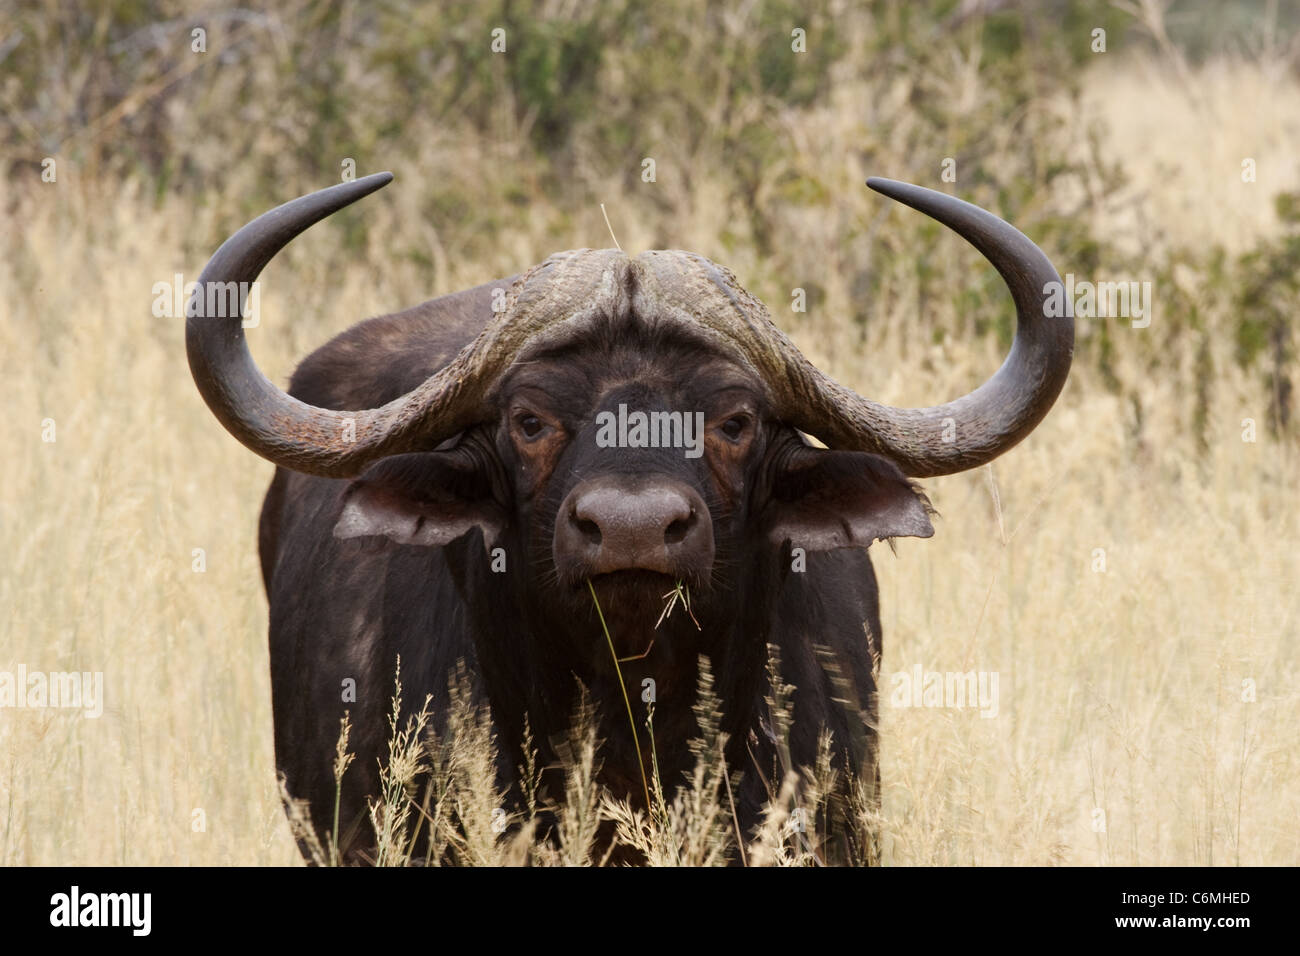 Buffalo head on in dry grass Stock Photo